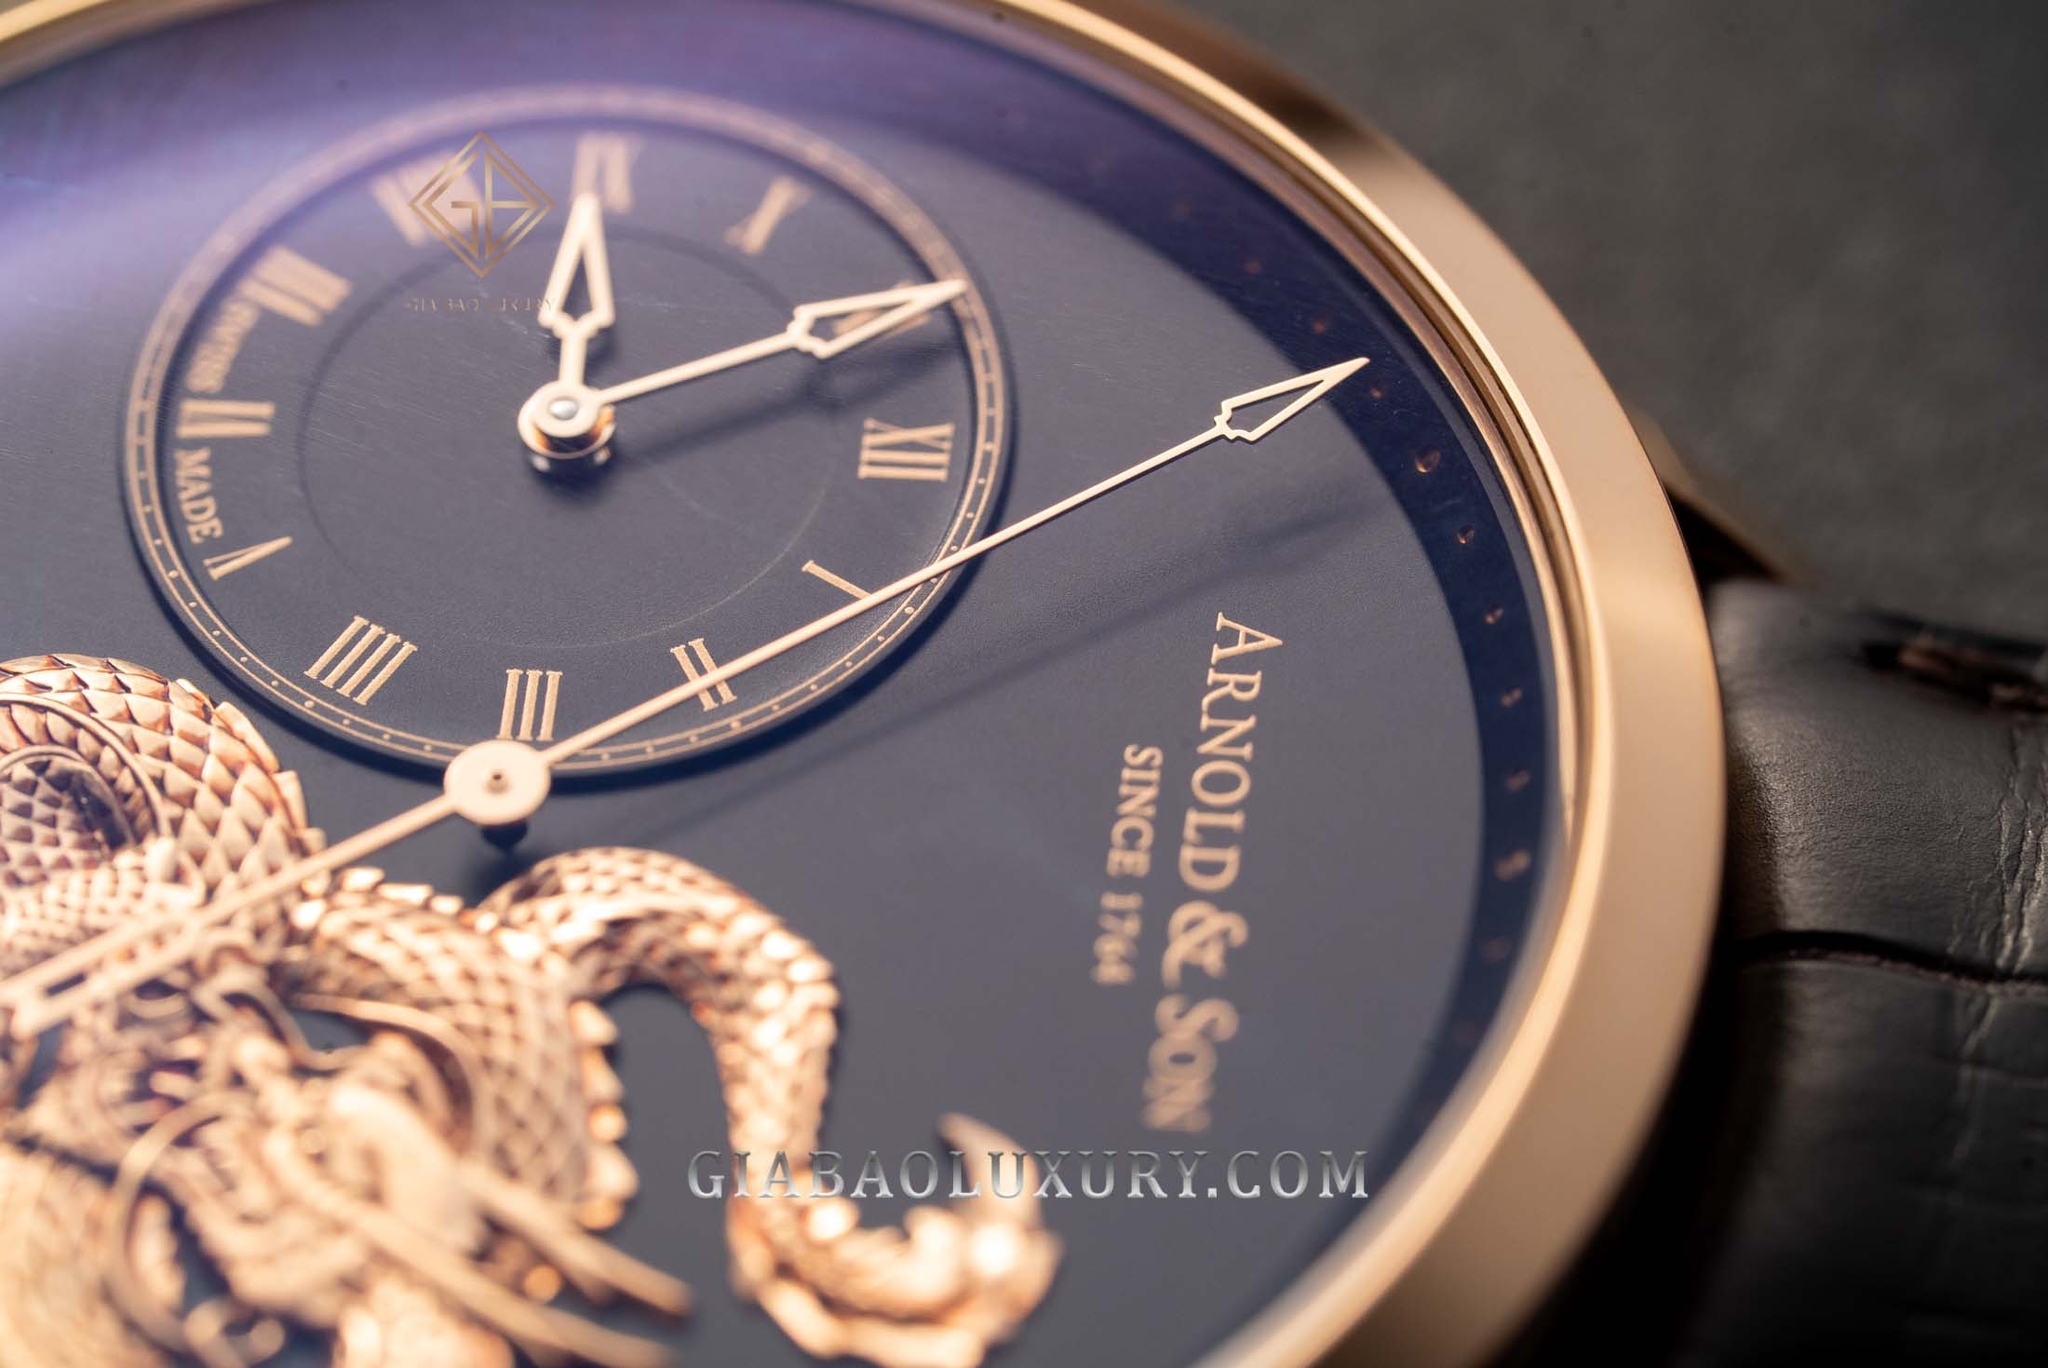 Đồng hồ Arnold & Son Metiers d'Art TB Dragon Limited Edition 1ARAP.B04A.C120P-121P